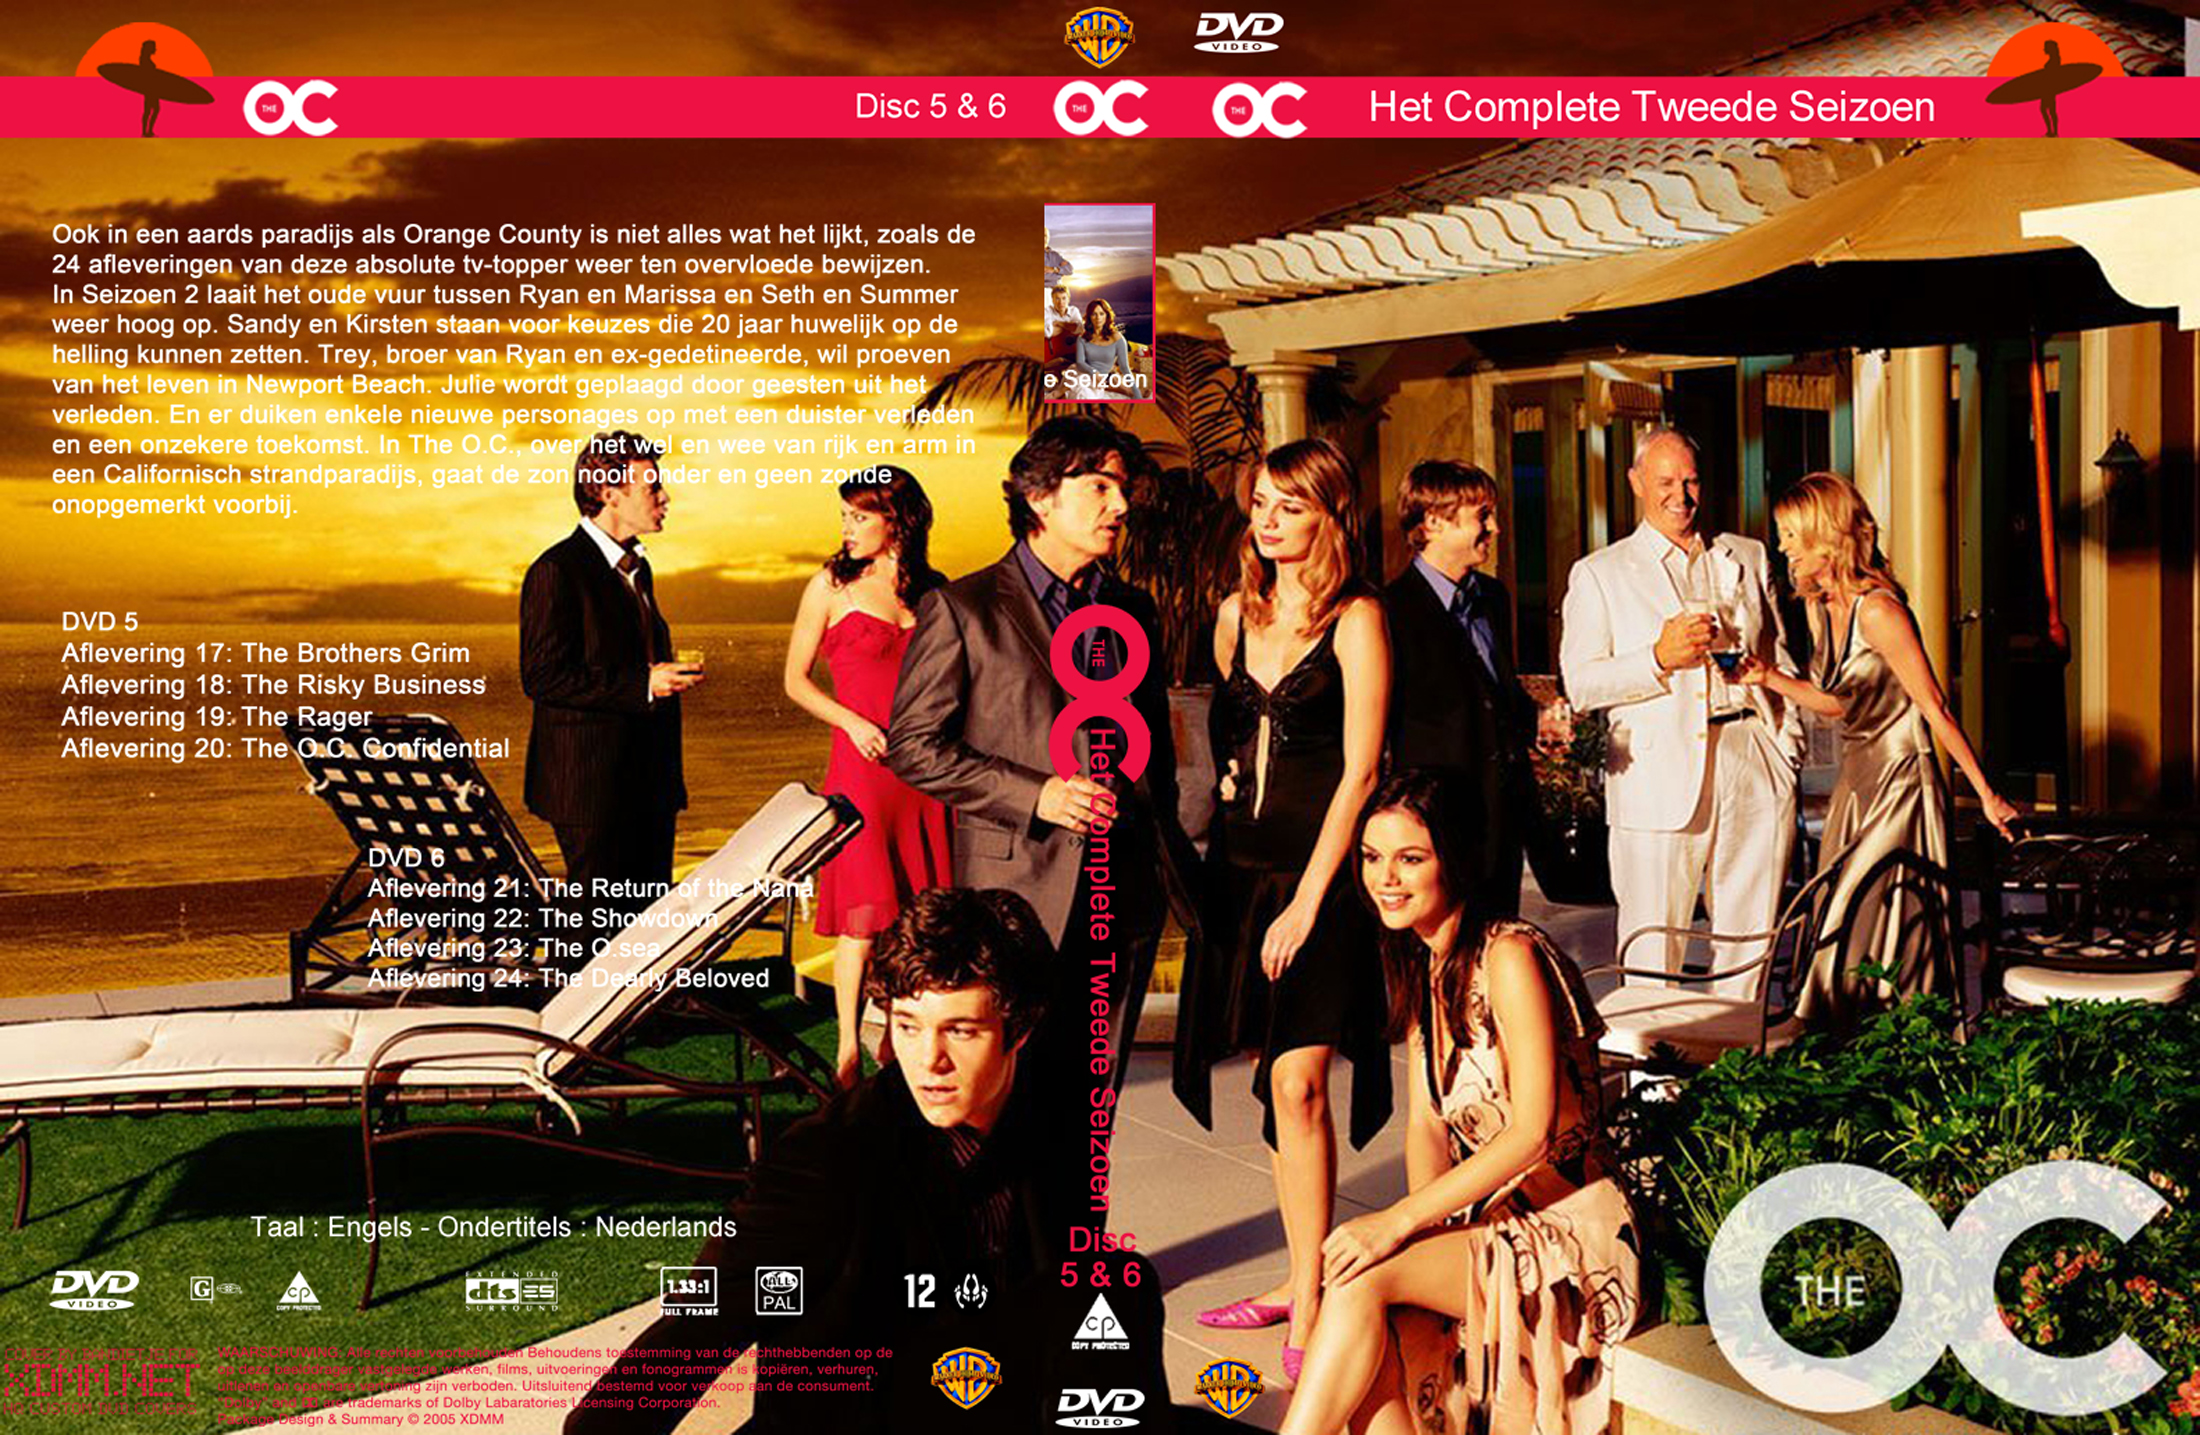 The OC seizoen 2 dvd 5-6